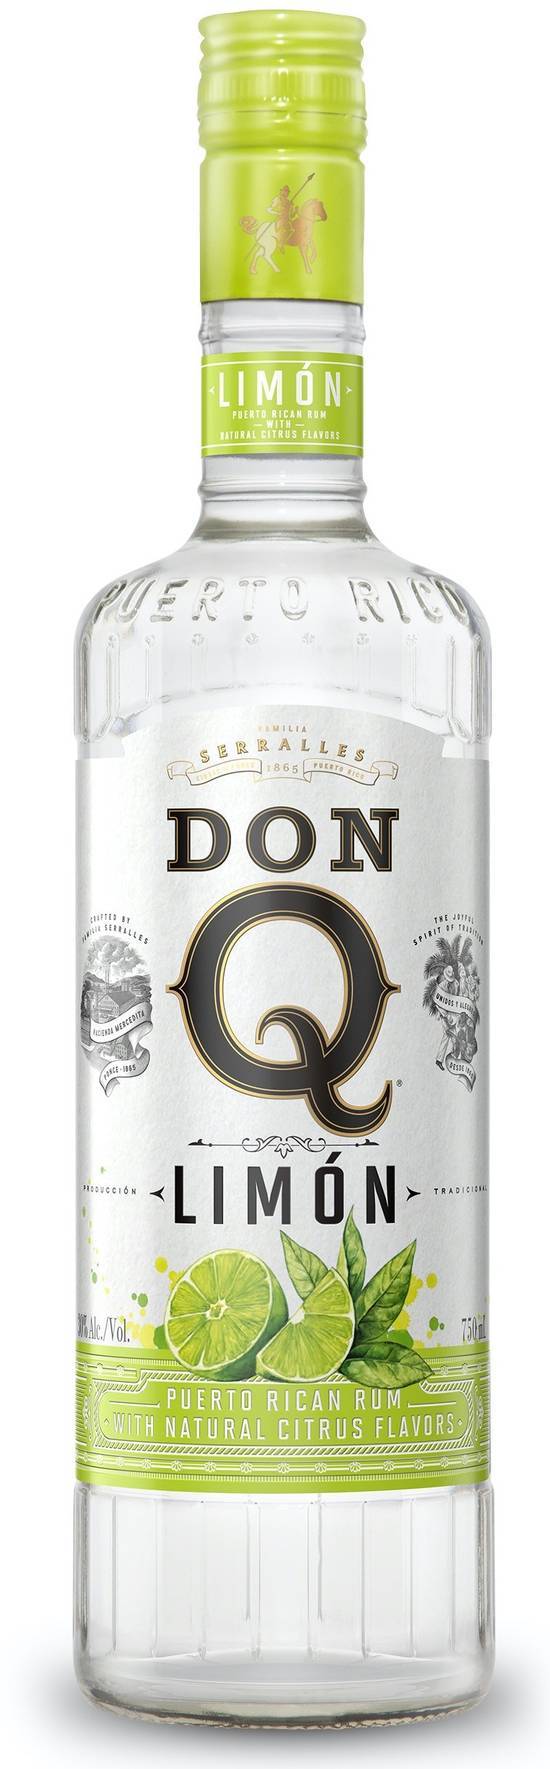 Don Q Limon Flavored Rum (750 ml)